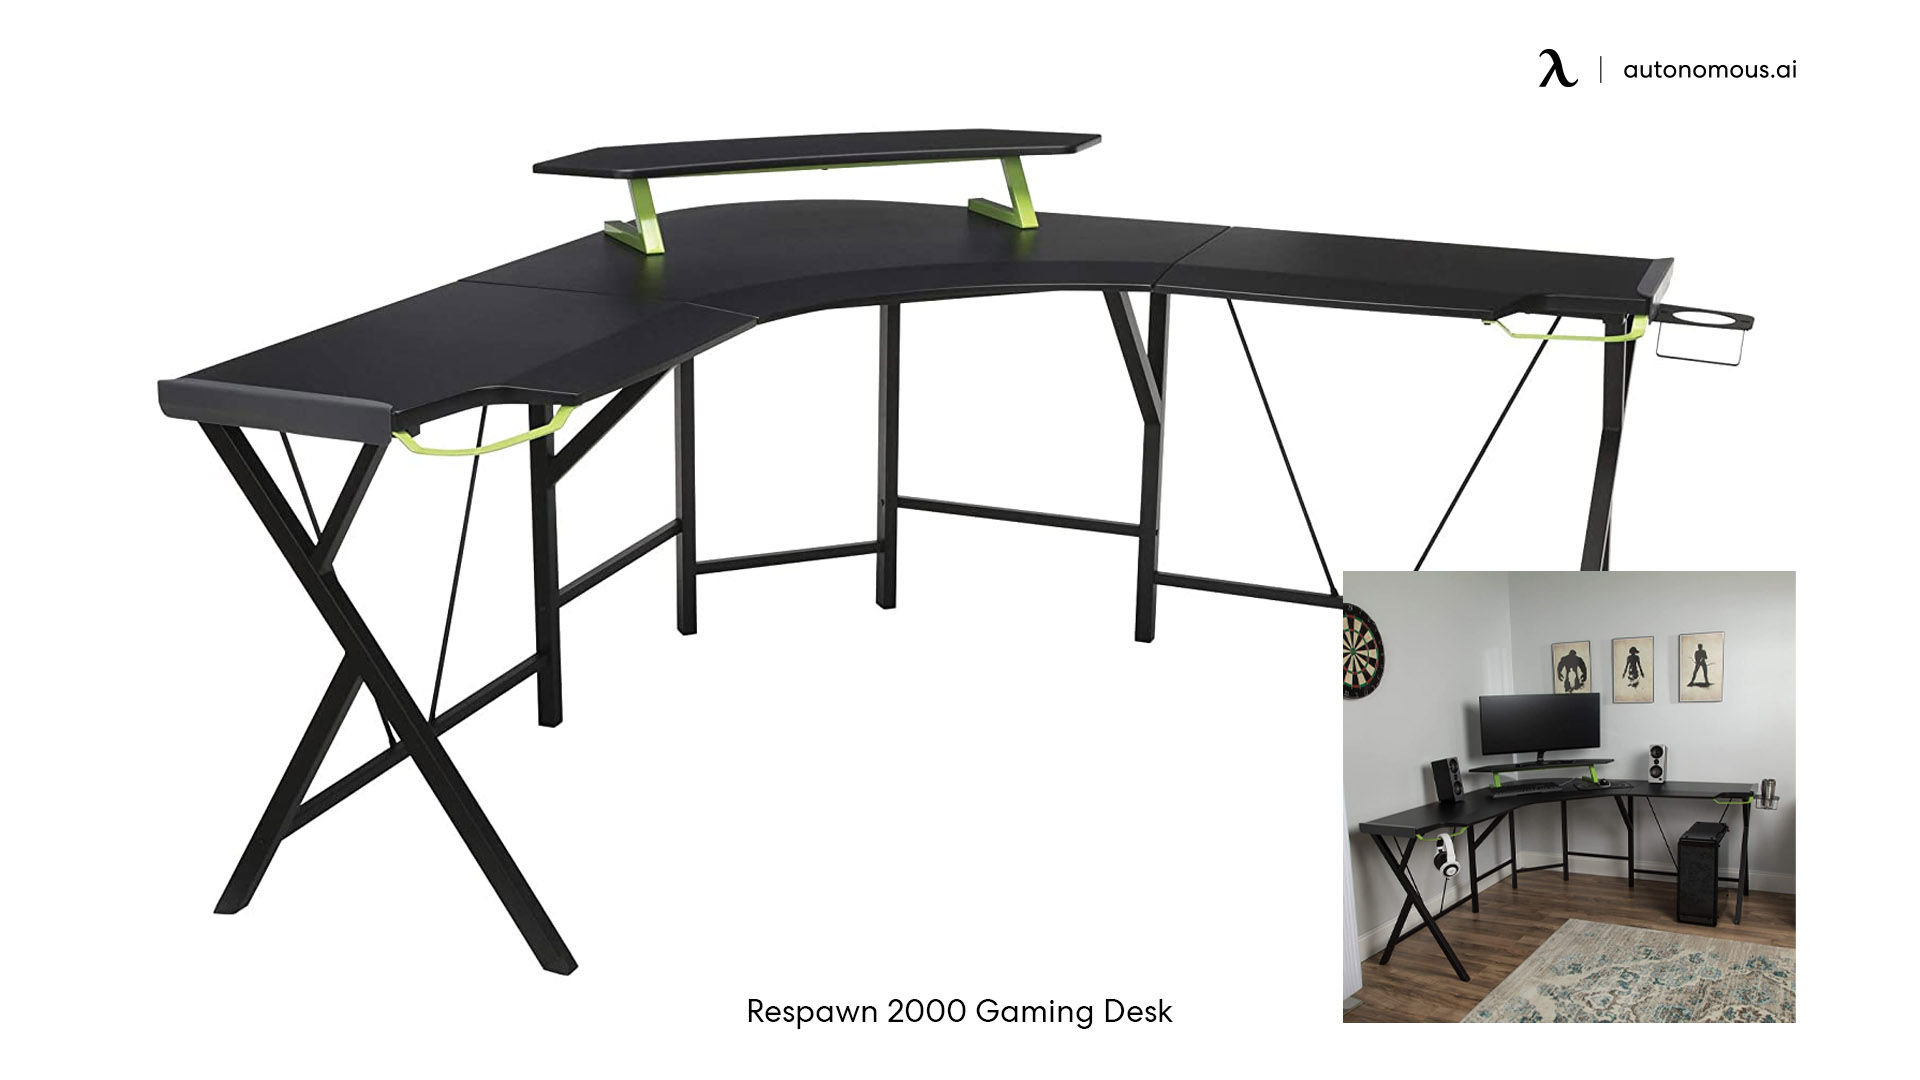 Respawn 2000 Gaming Desk